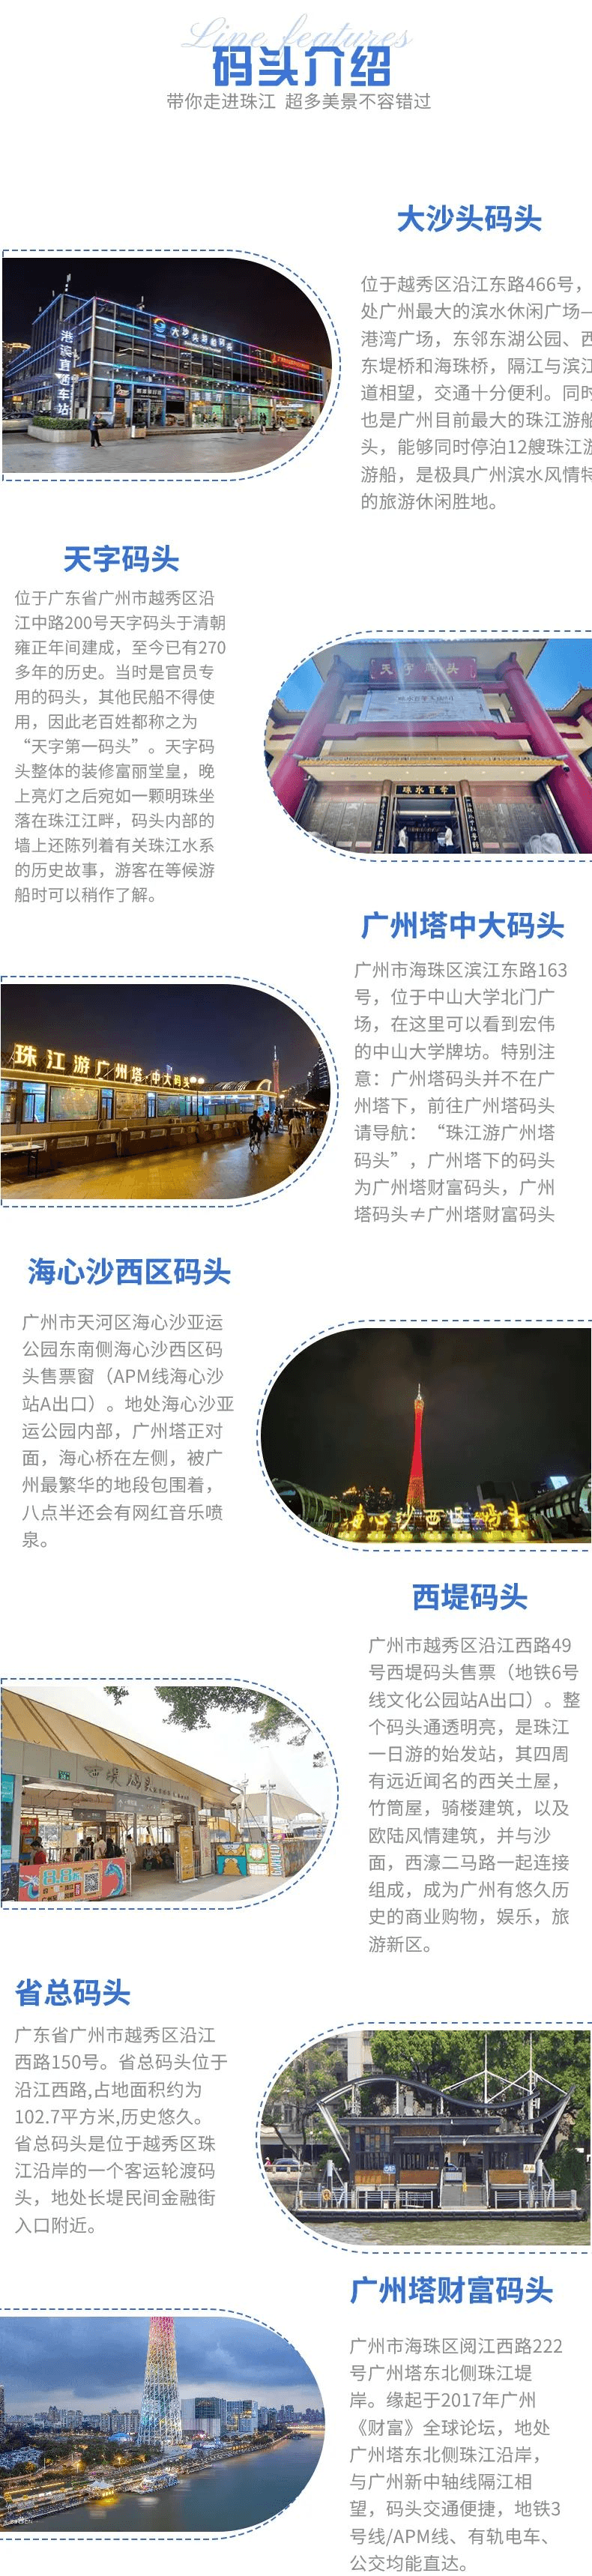 珠江夜游码头_compressed.png